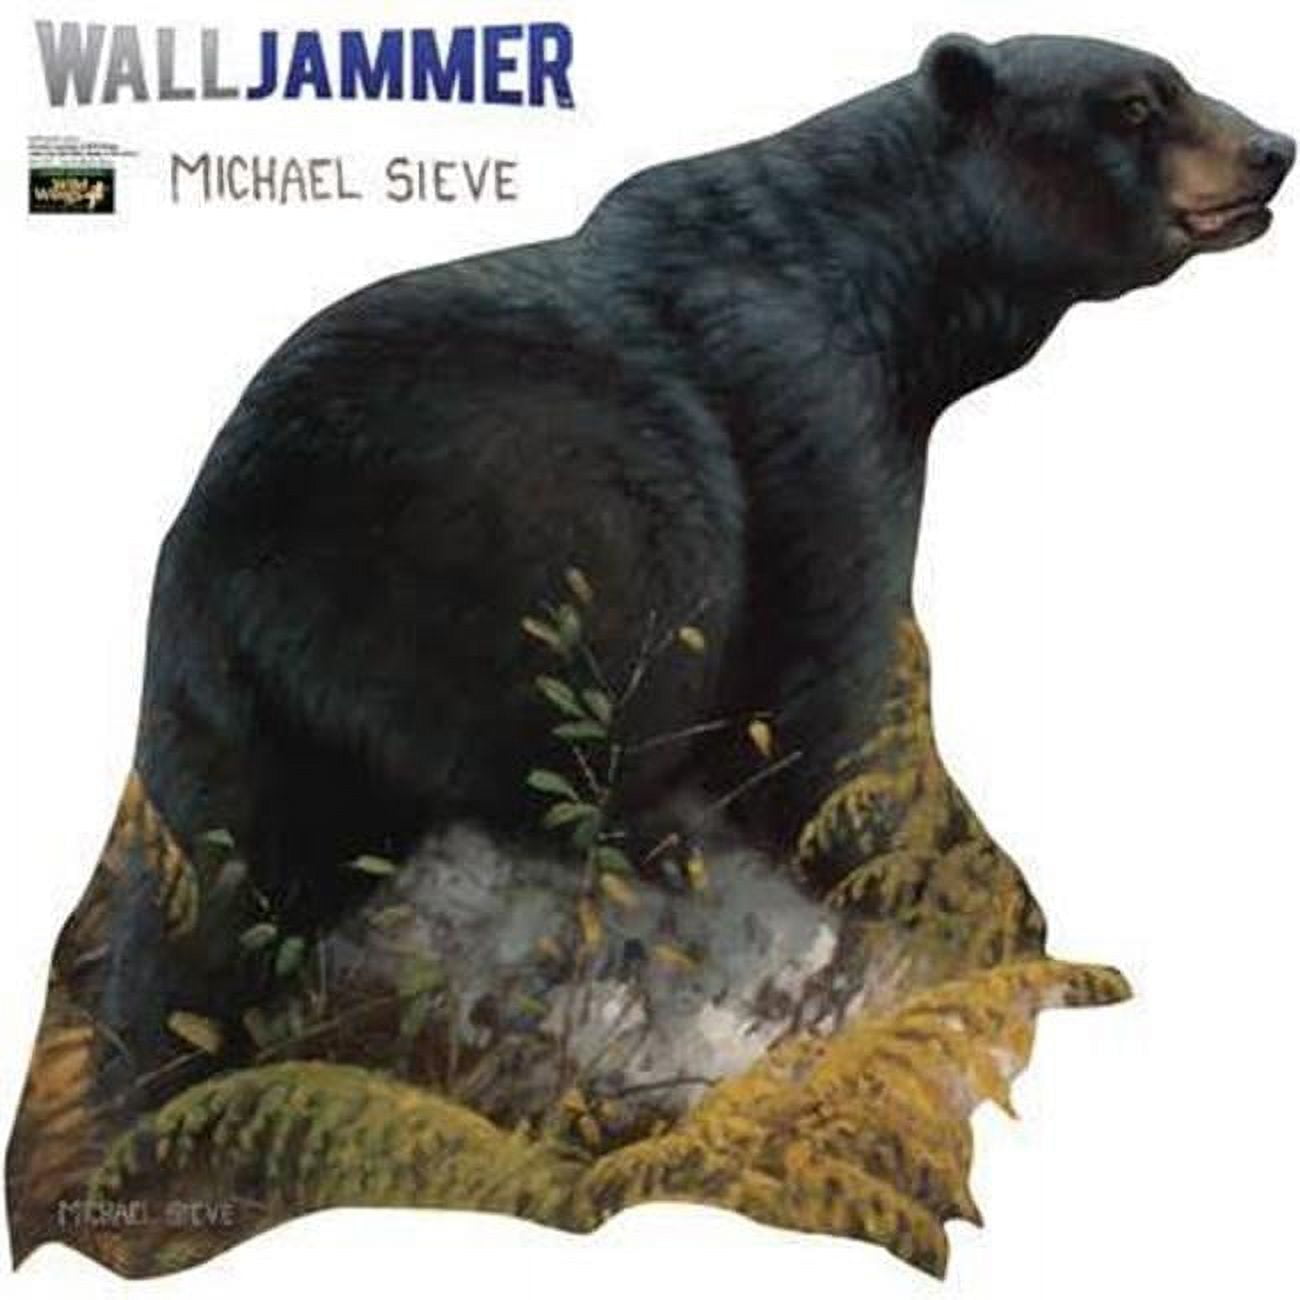 Wj1202 48 In. Black Bear Wall Decal